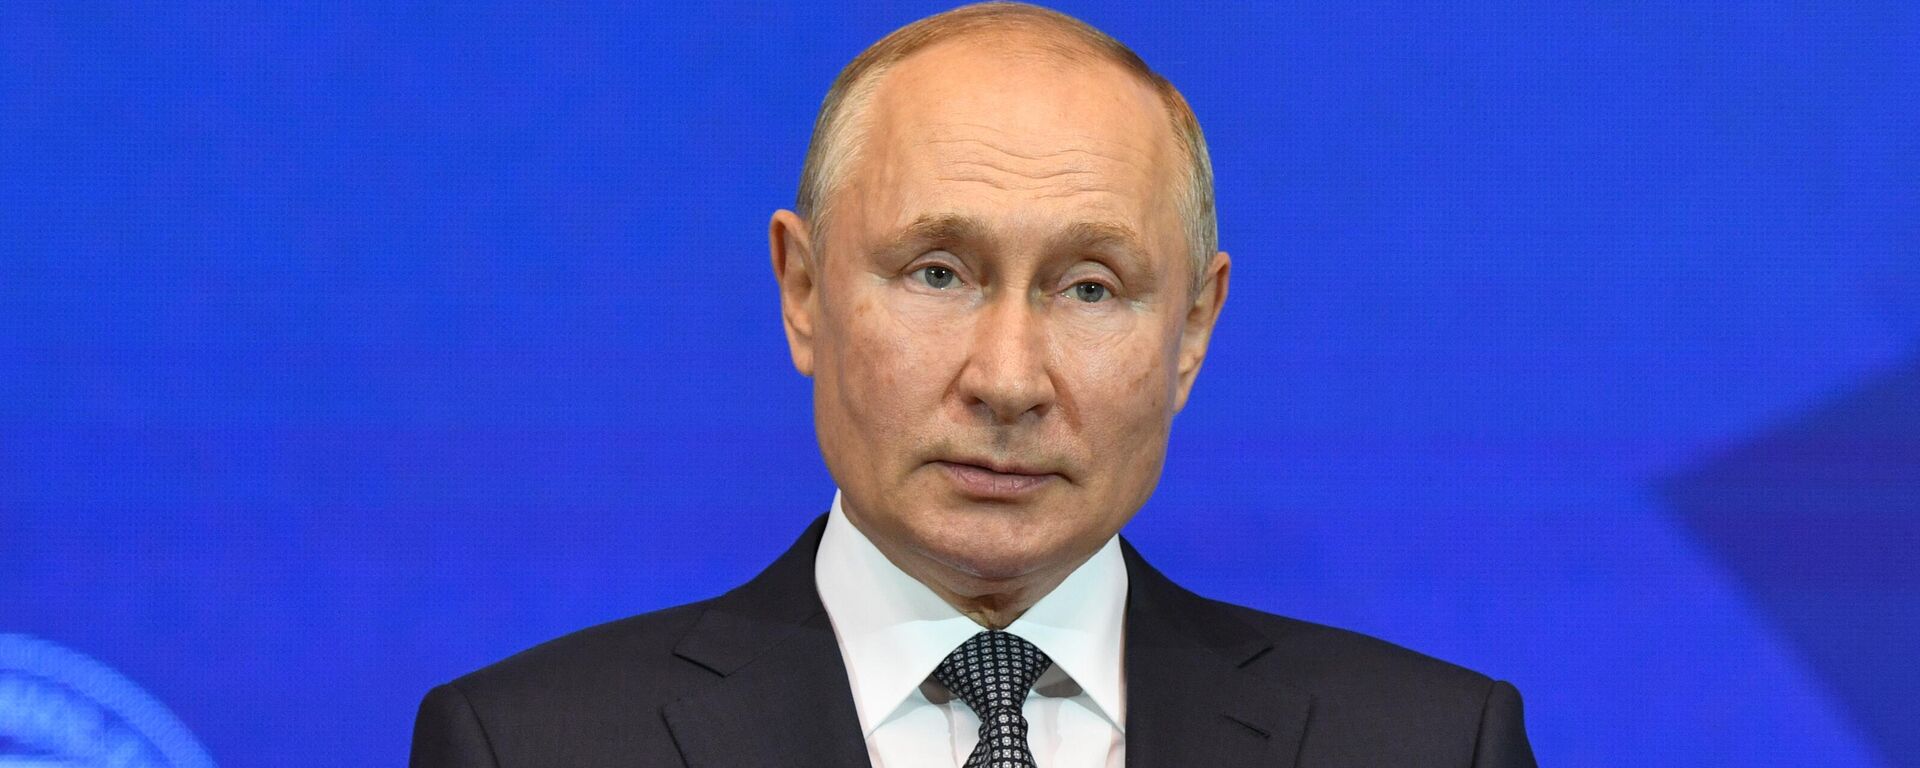 Rusijos prezidentas Vladimiras Putinas - Sputnik Lietuva, 1920, 01.11.2021